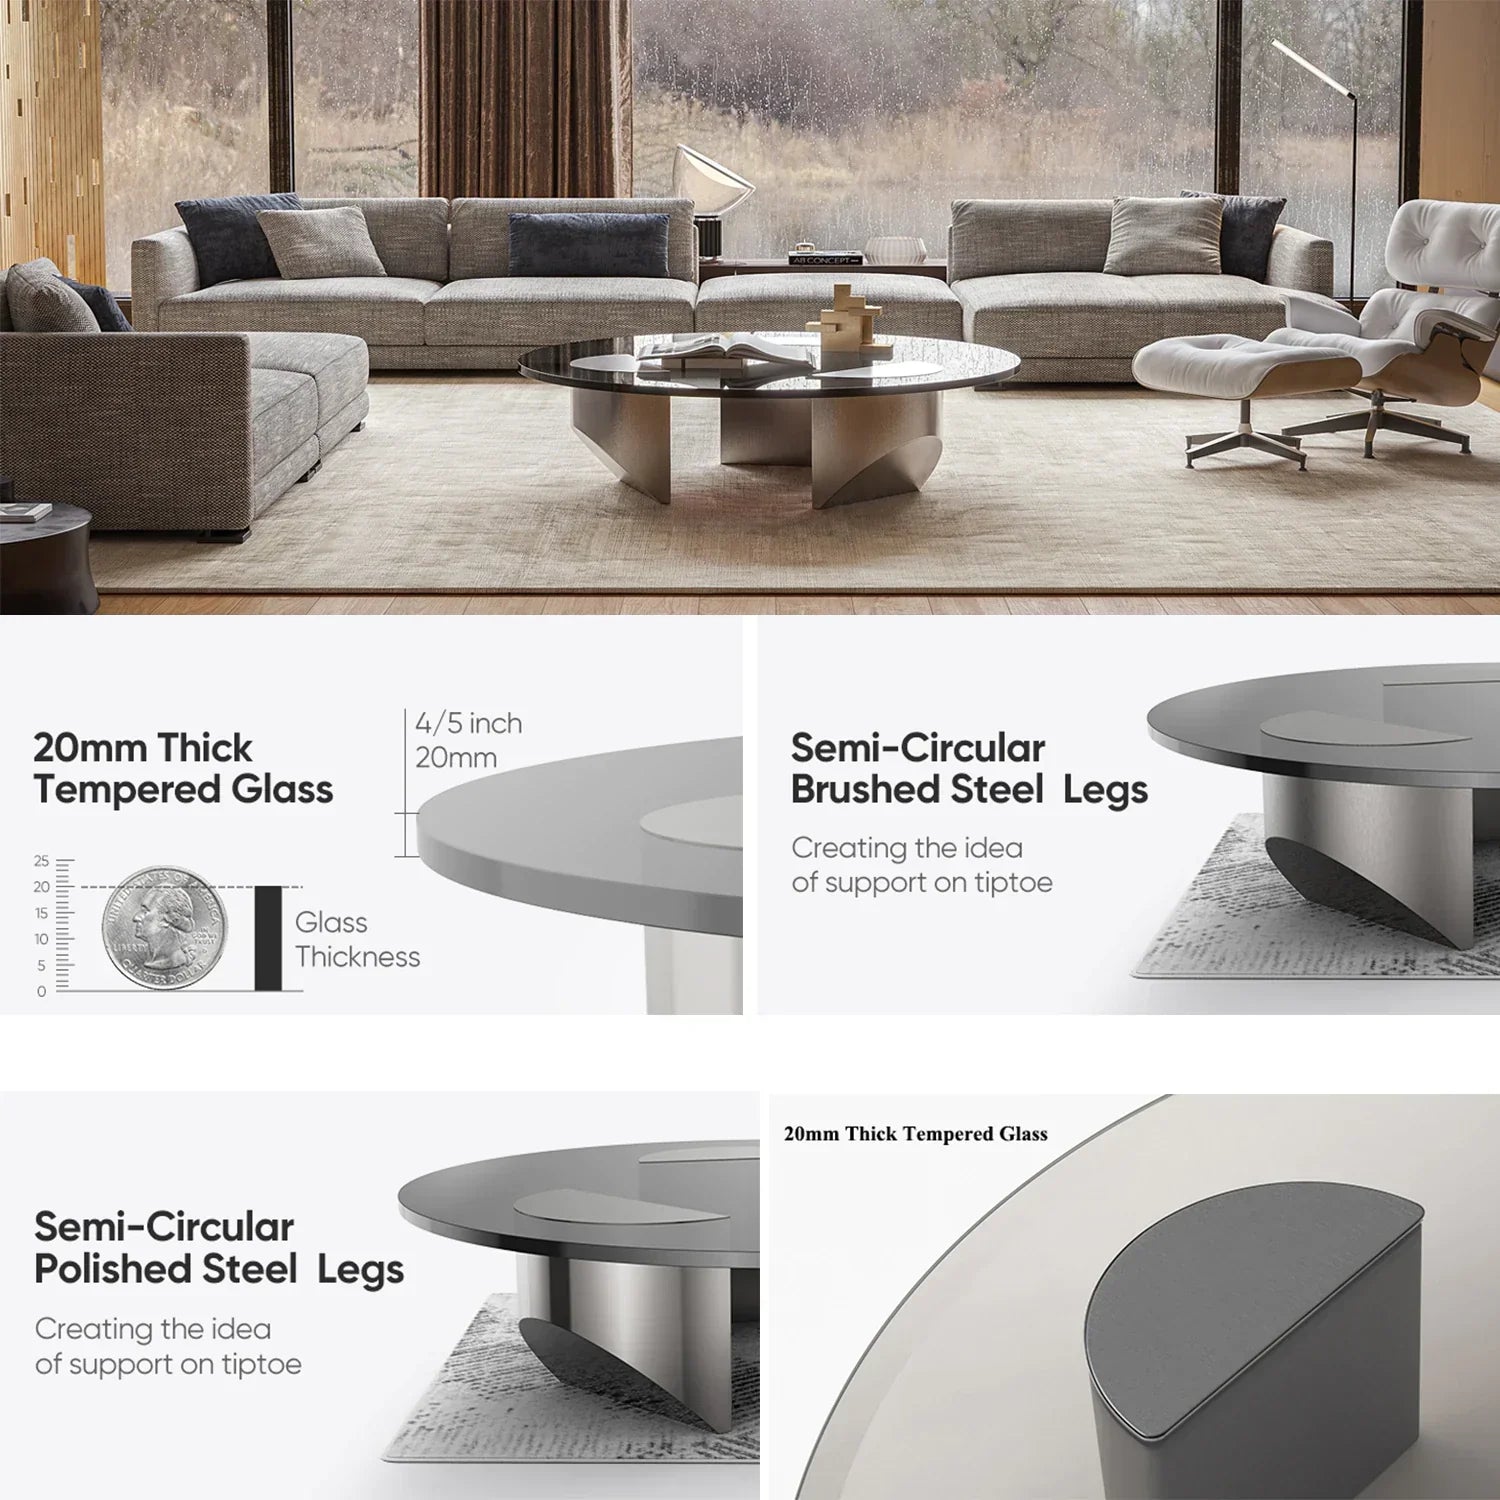 Arthia Designs - Minotti Wedge Coffee Table - Review